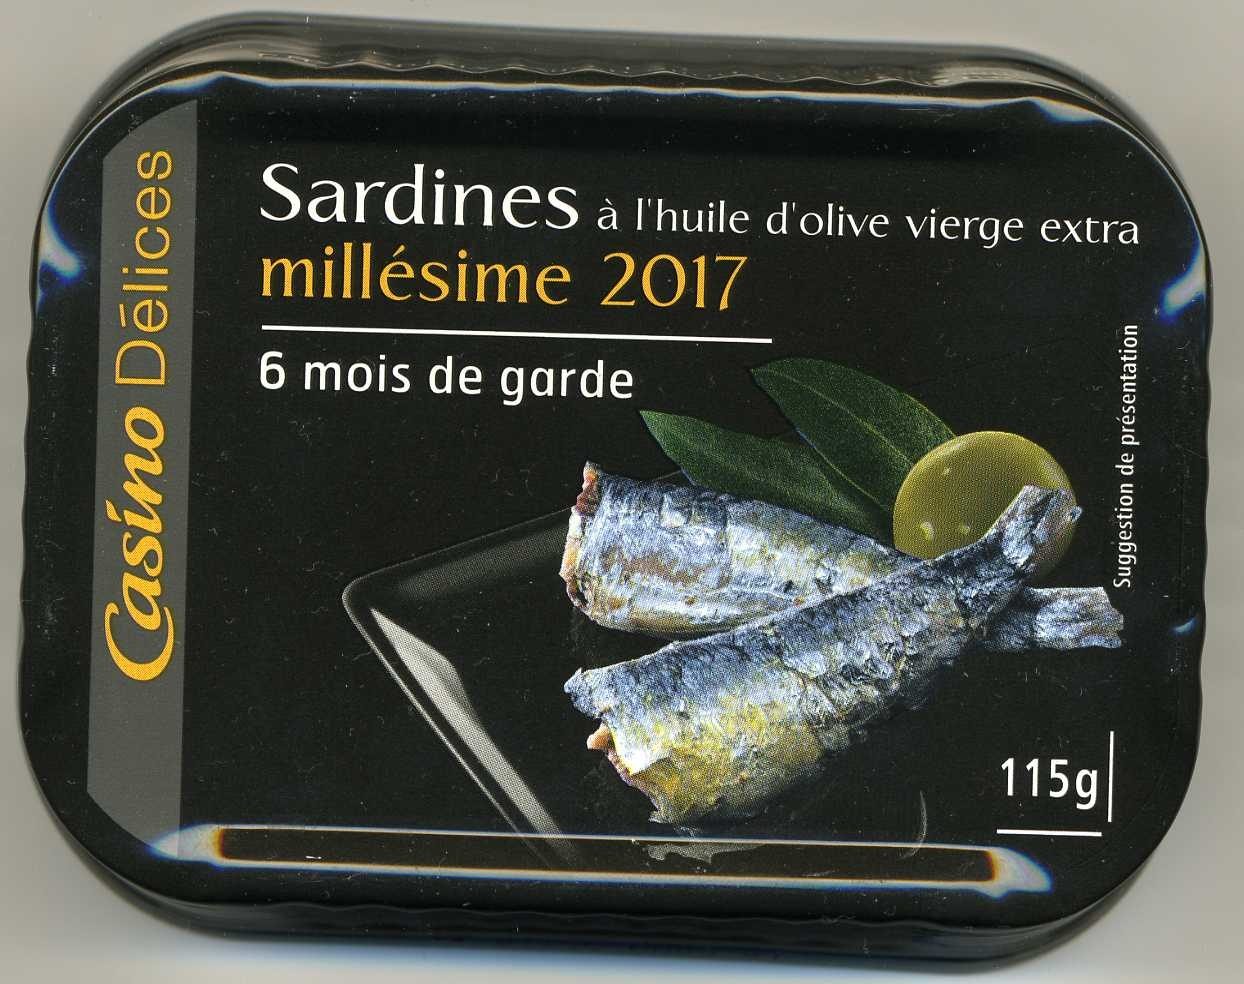 Sardines à l'huile d'olive vierge extra millesime 2017 - Producto - fr